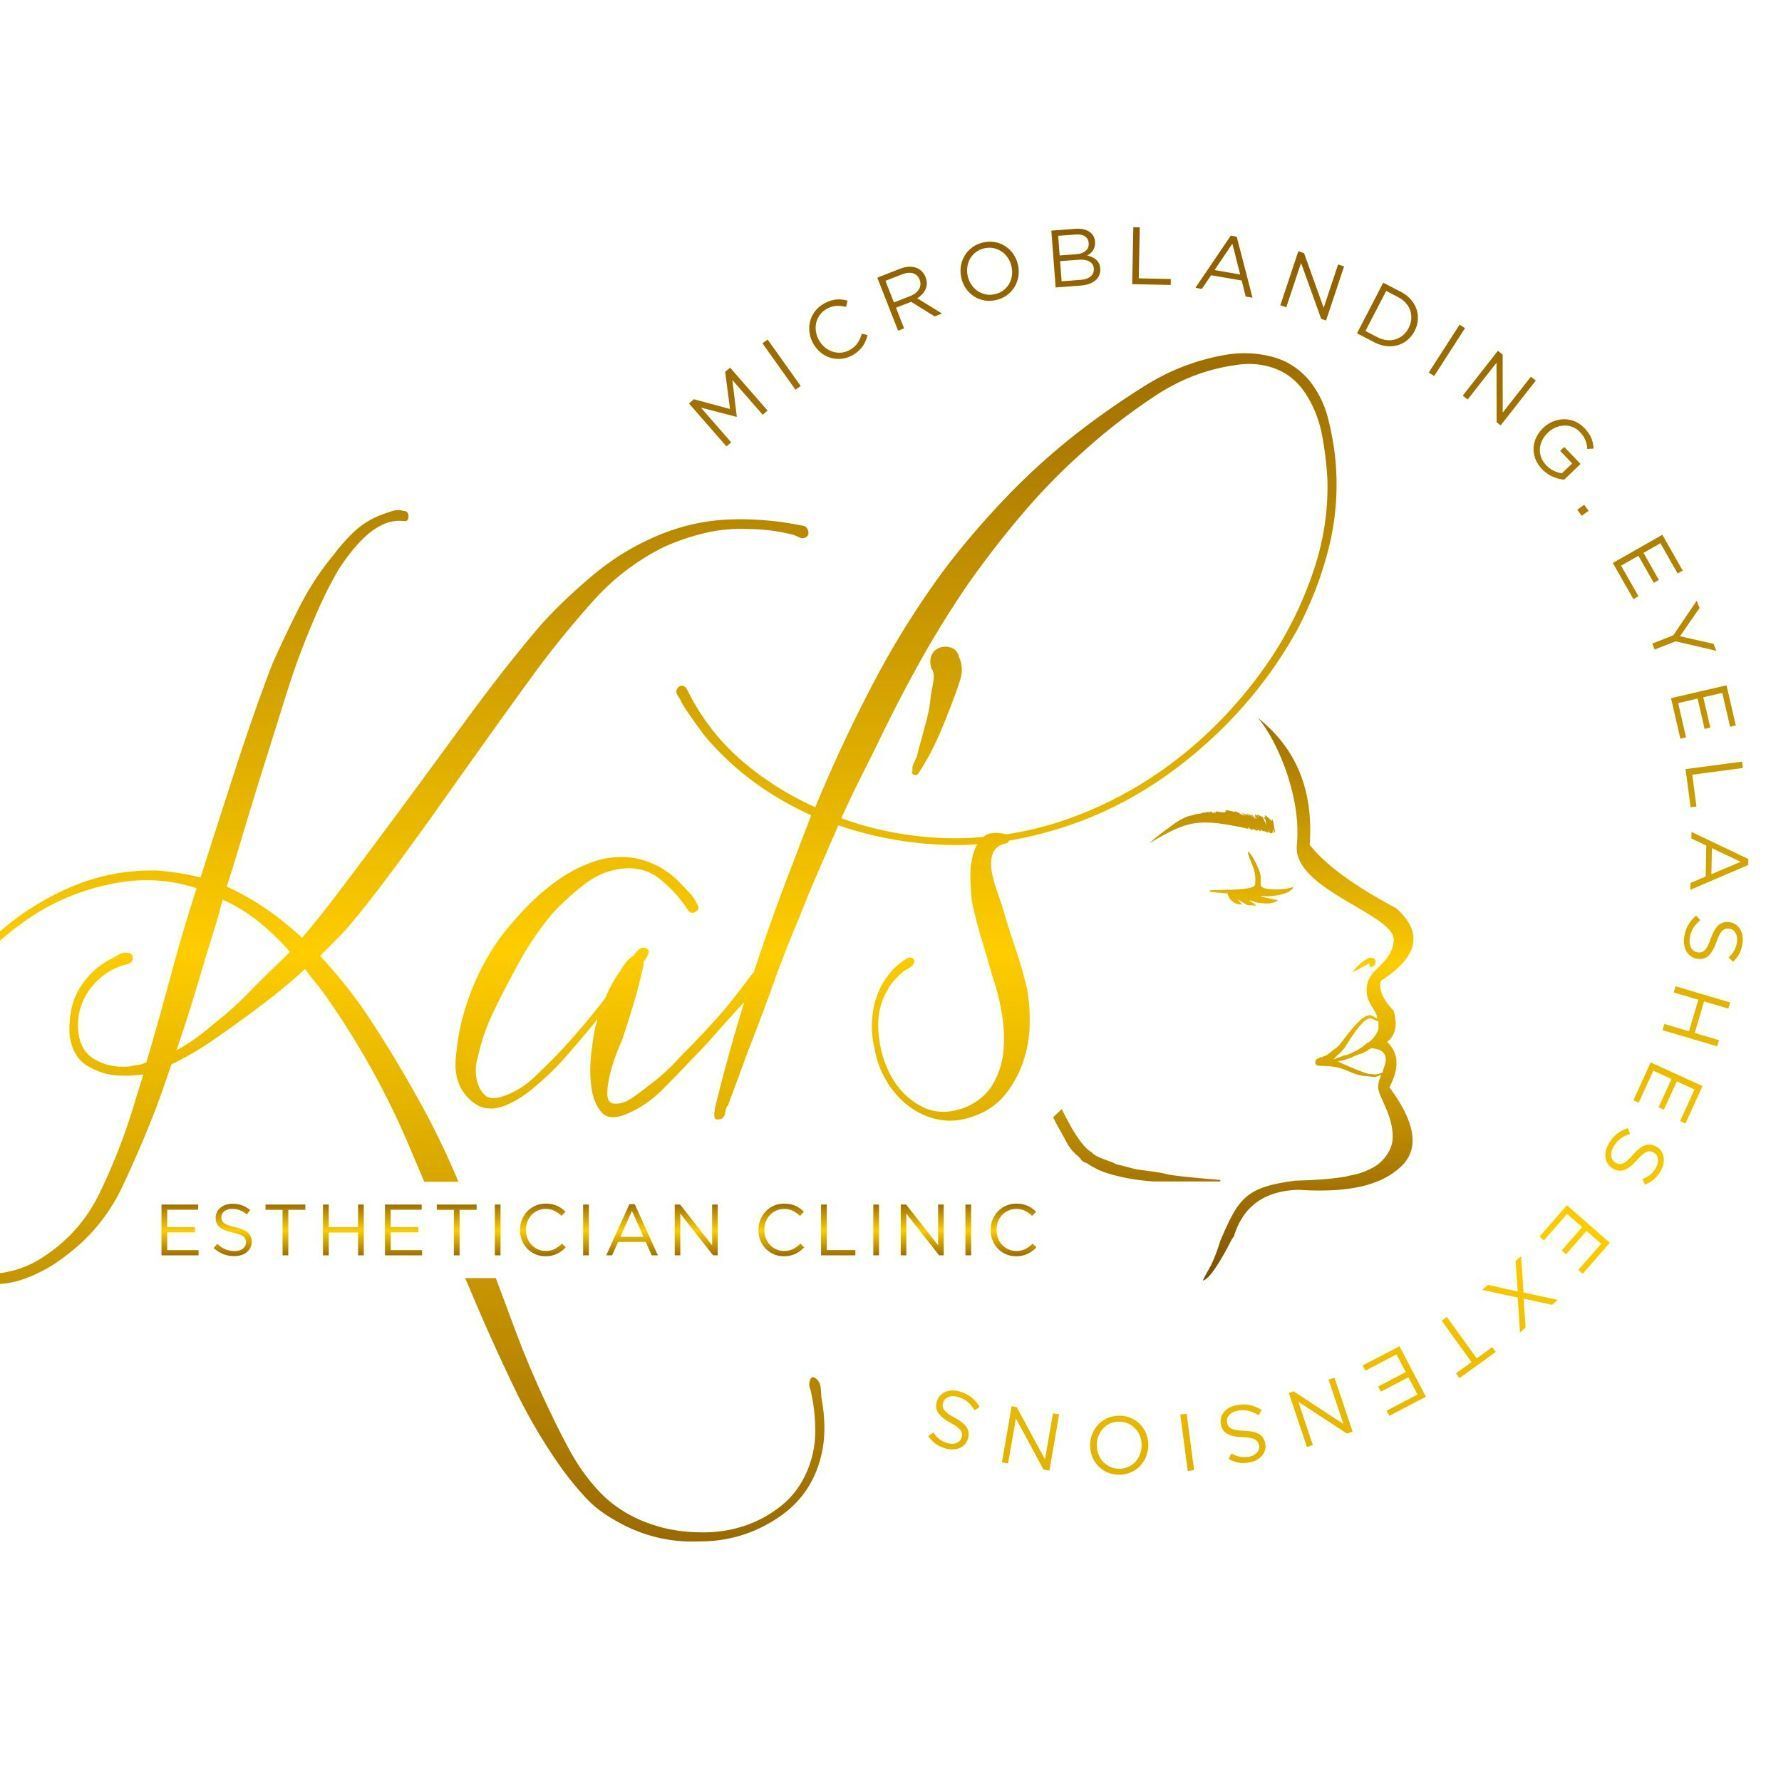 Kal's Esthetician Clinic, 1287 Lake Plaza Dr, Suite 130 room 3, Colorado Springs, 80906